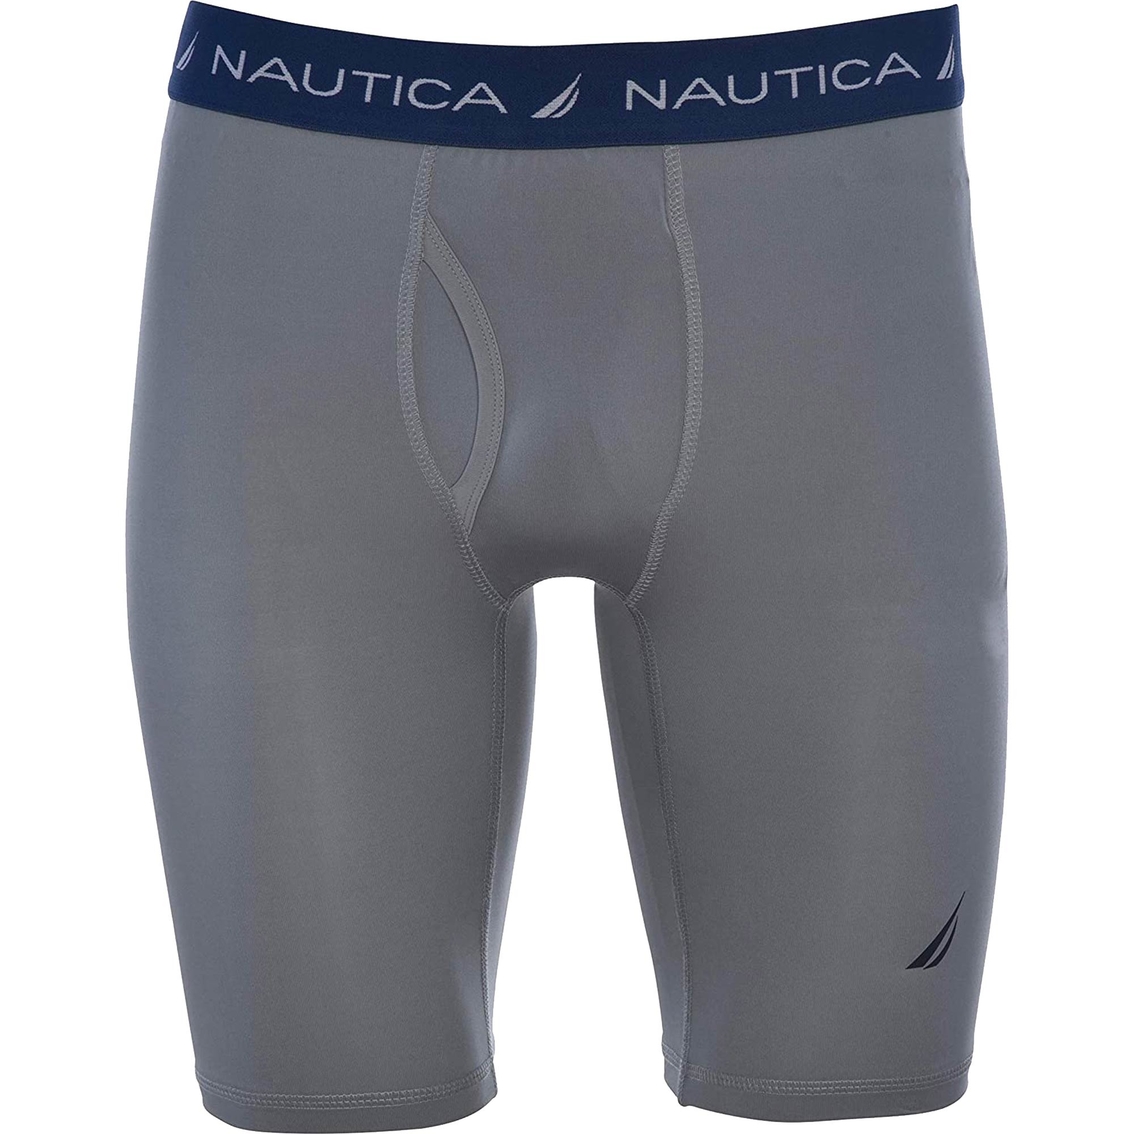 Nautica Base Layer Bike Shorts, Underwear